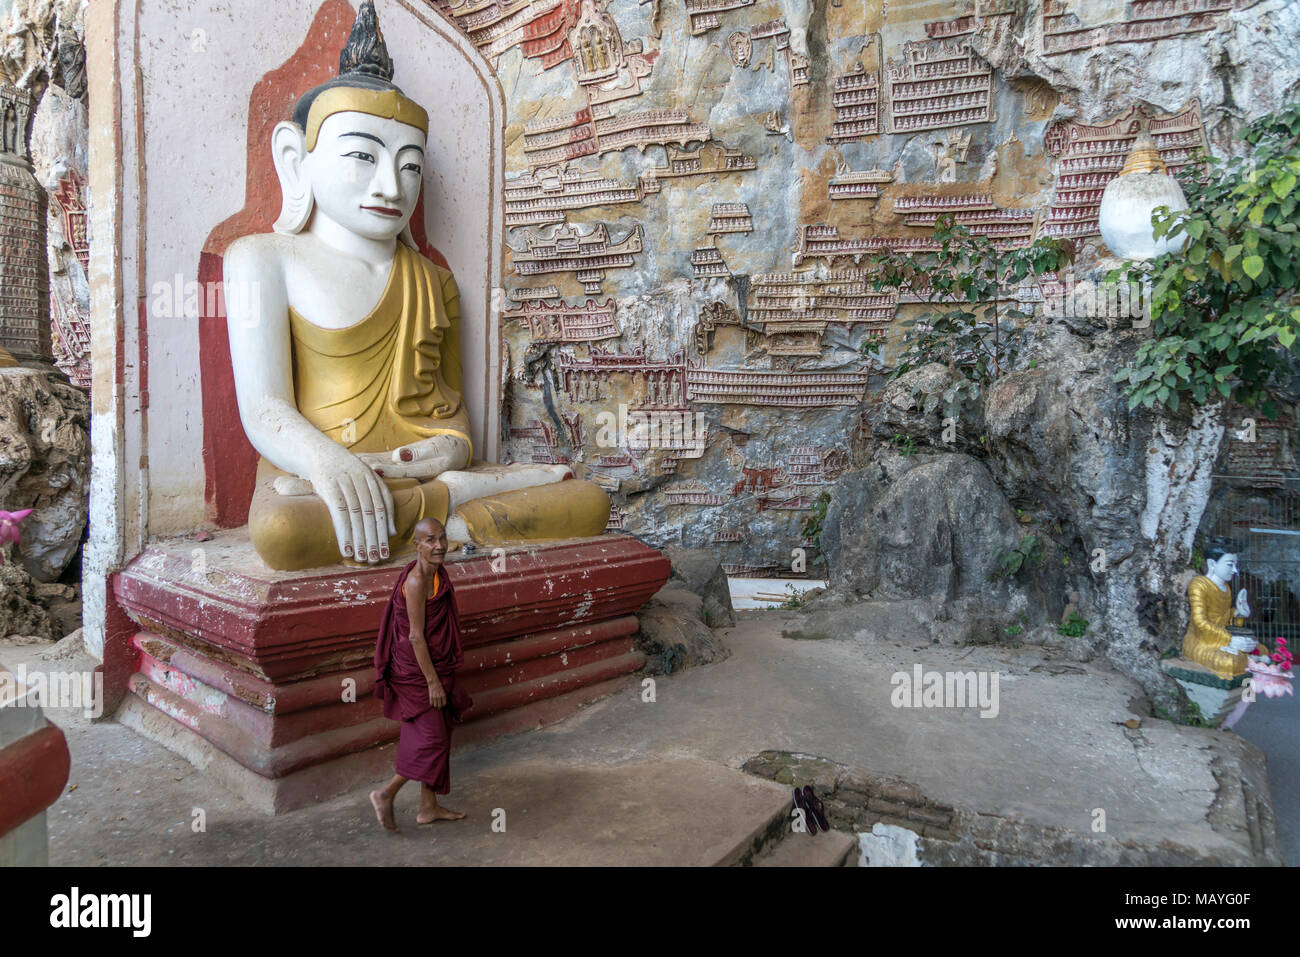 Buddha-Statuen in der Kawgon-Höhle, Hpa-an, Myanmar, Asien  |  Buddha statues in the Kawgun Cave, Hpa-an, Myanmar, Asia Stock Photo